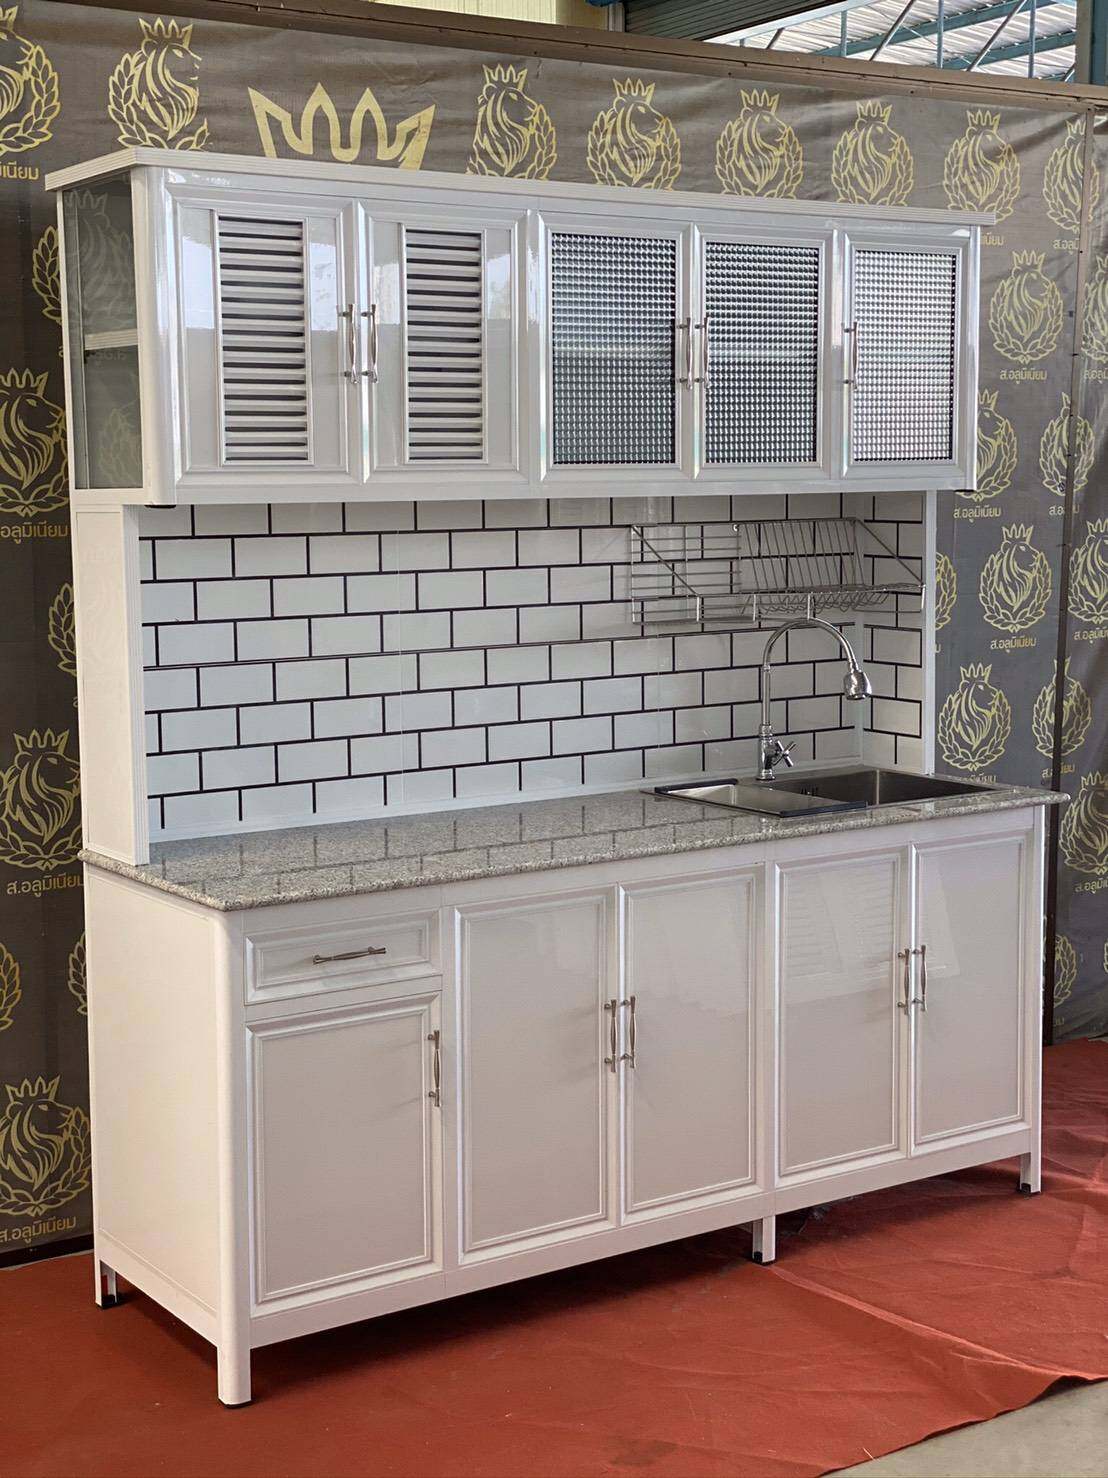 homefurnituer ชุดตู้ครัว 1 หลุม หน้าแกรนิตแท้ ขนาด กว้าง 180 x ลึก 60 x สูง 190 ซม. จัดส่งฟรีกรุงเทพฯและปริมณฑล